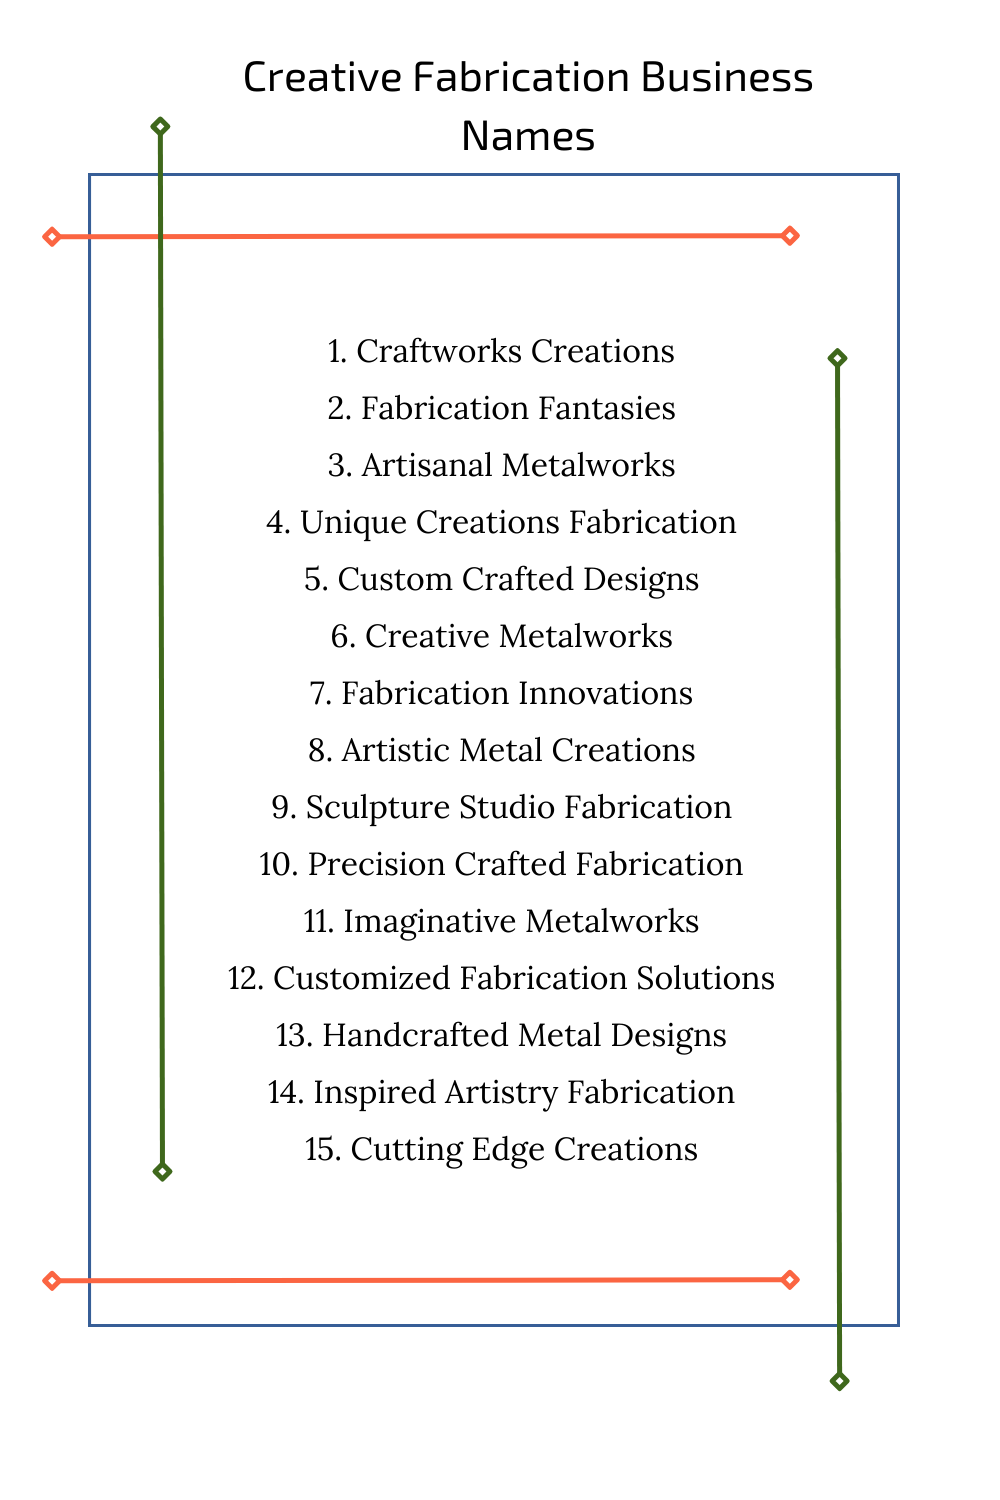 Creative Fabrication Business Names